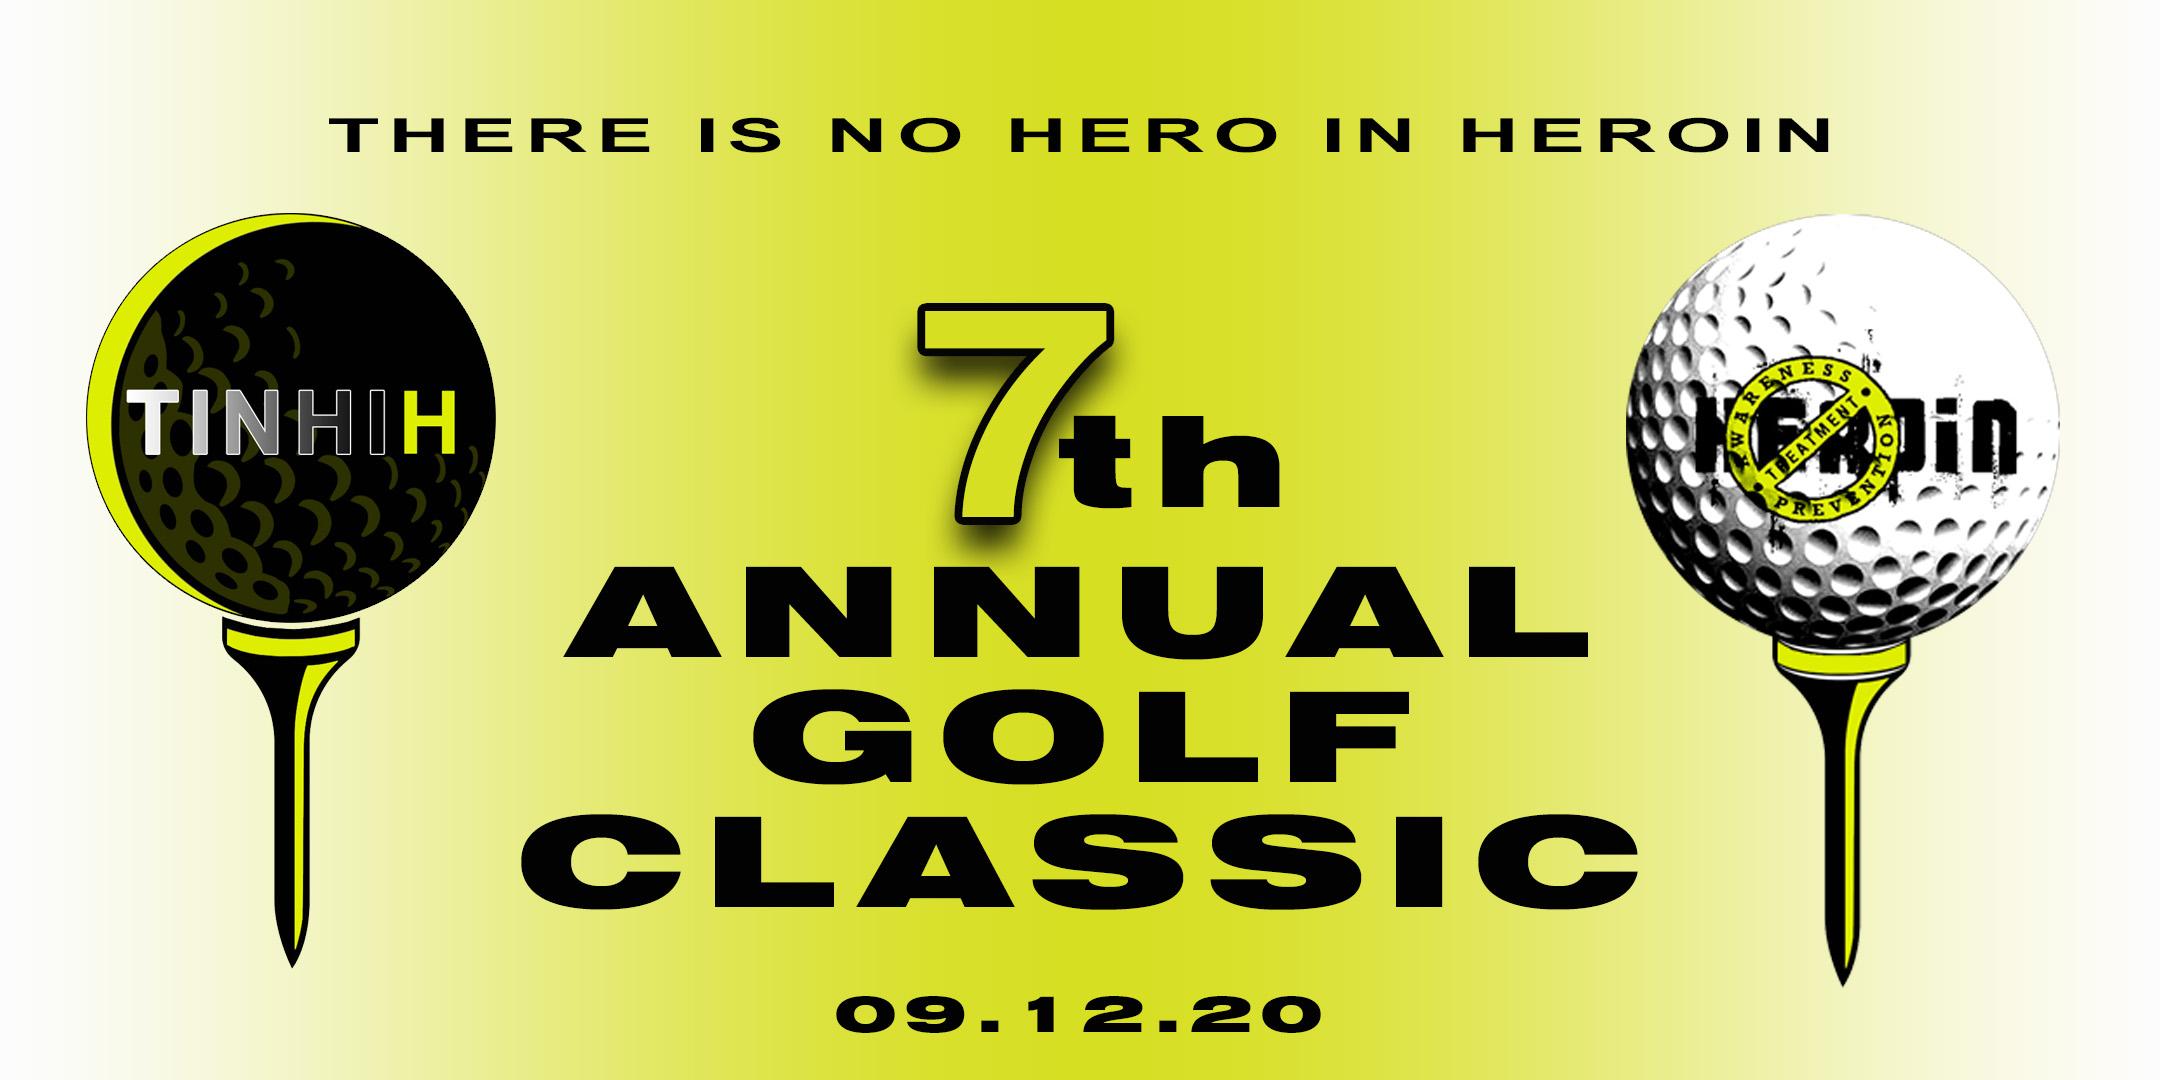 TINHIH's 7th Annual Golf Classic